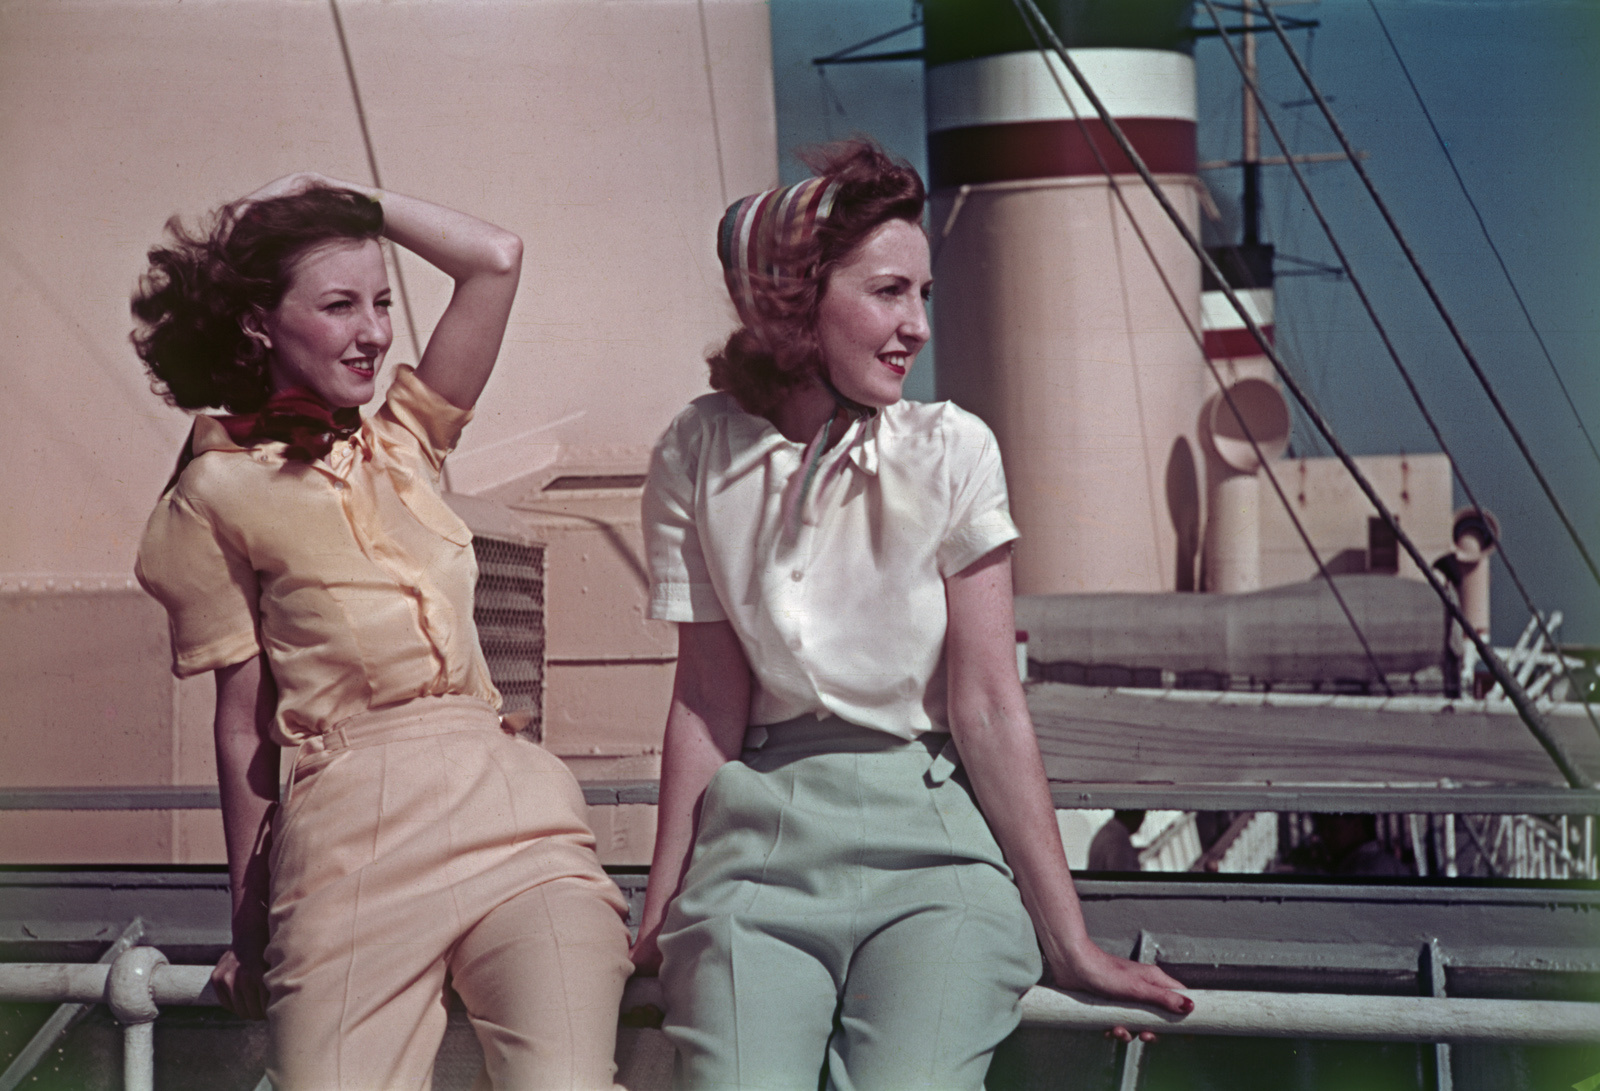 Fashionable young women aboard the German cruise ship Reliance, Franz Grasser, May 1938. Deutsche Fotothek. Public Domain.